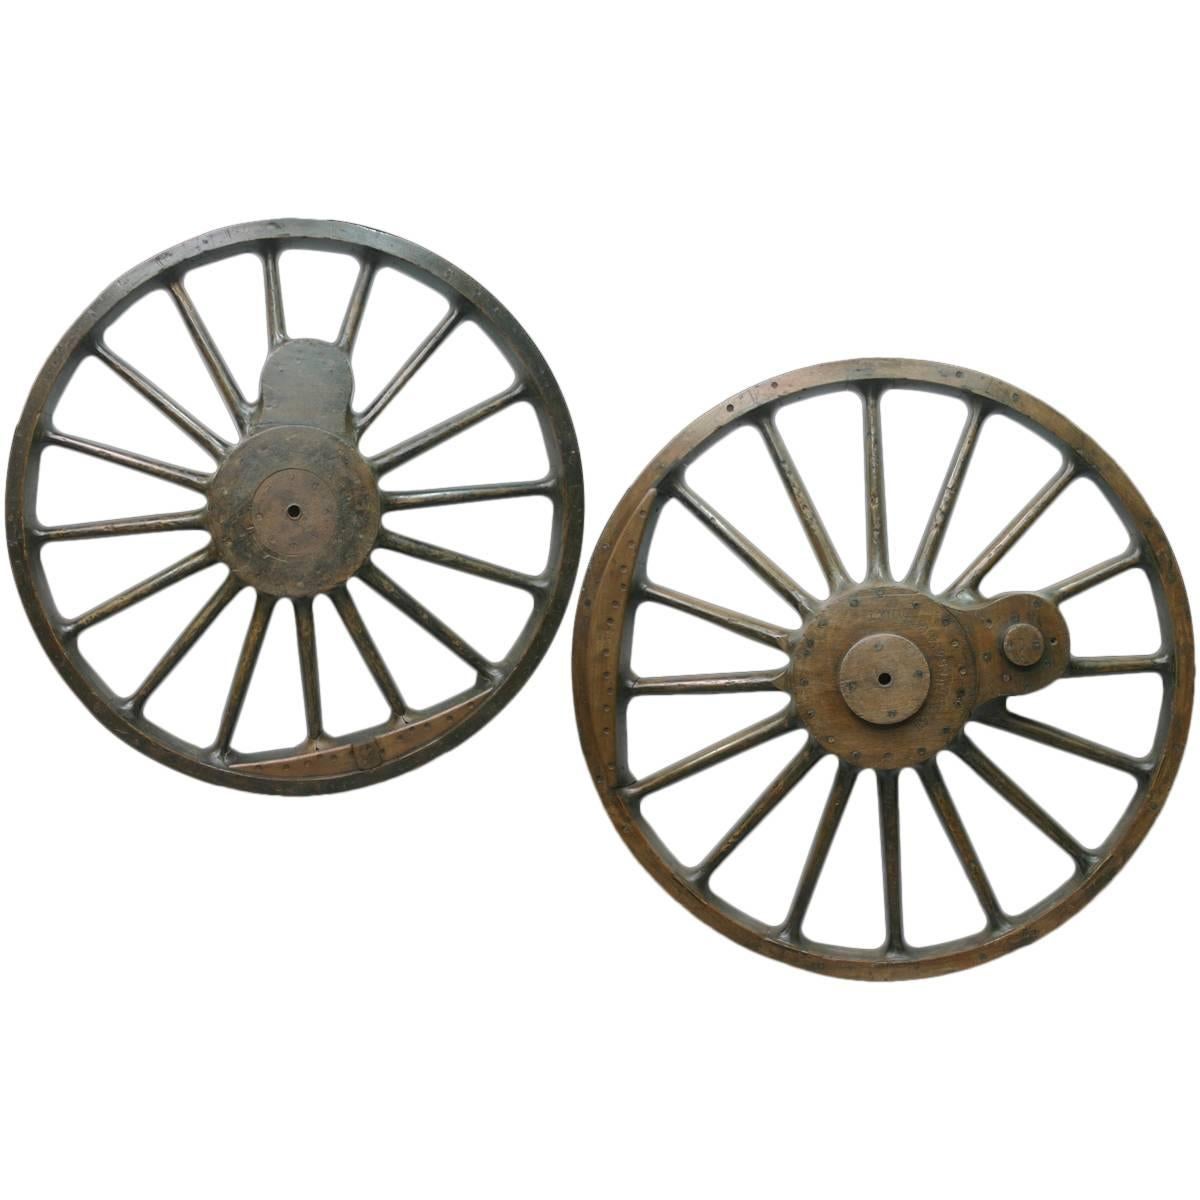 Pair of 19th Century Oak and Pine Reclaimed Locomotive Wheel Patterns